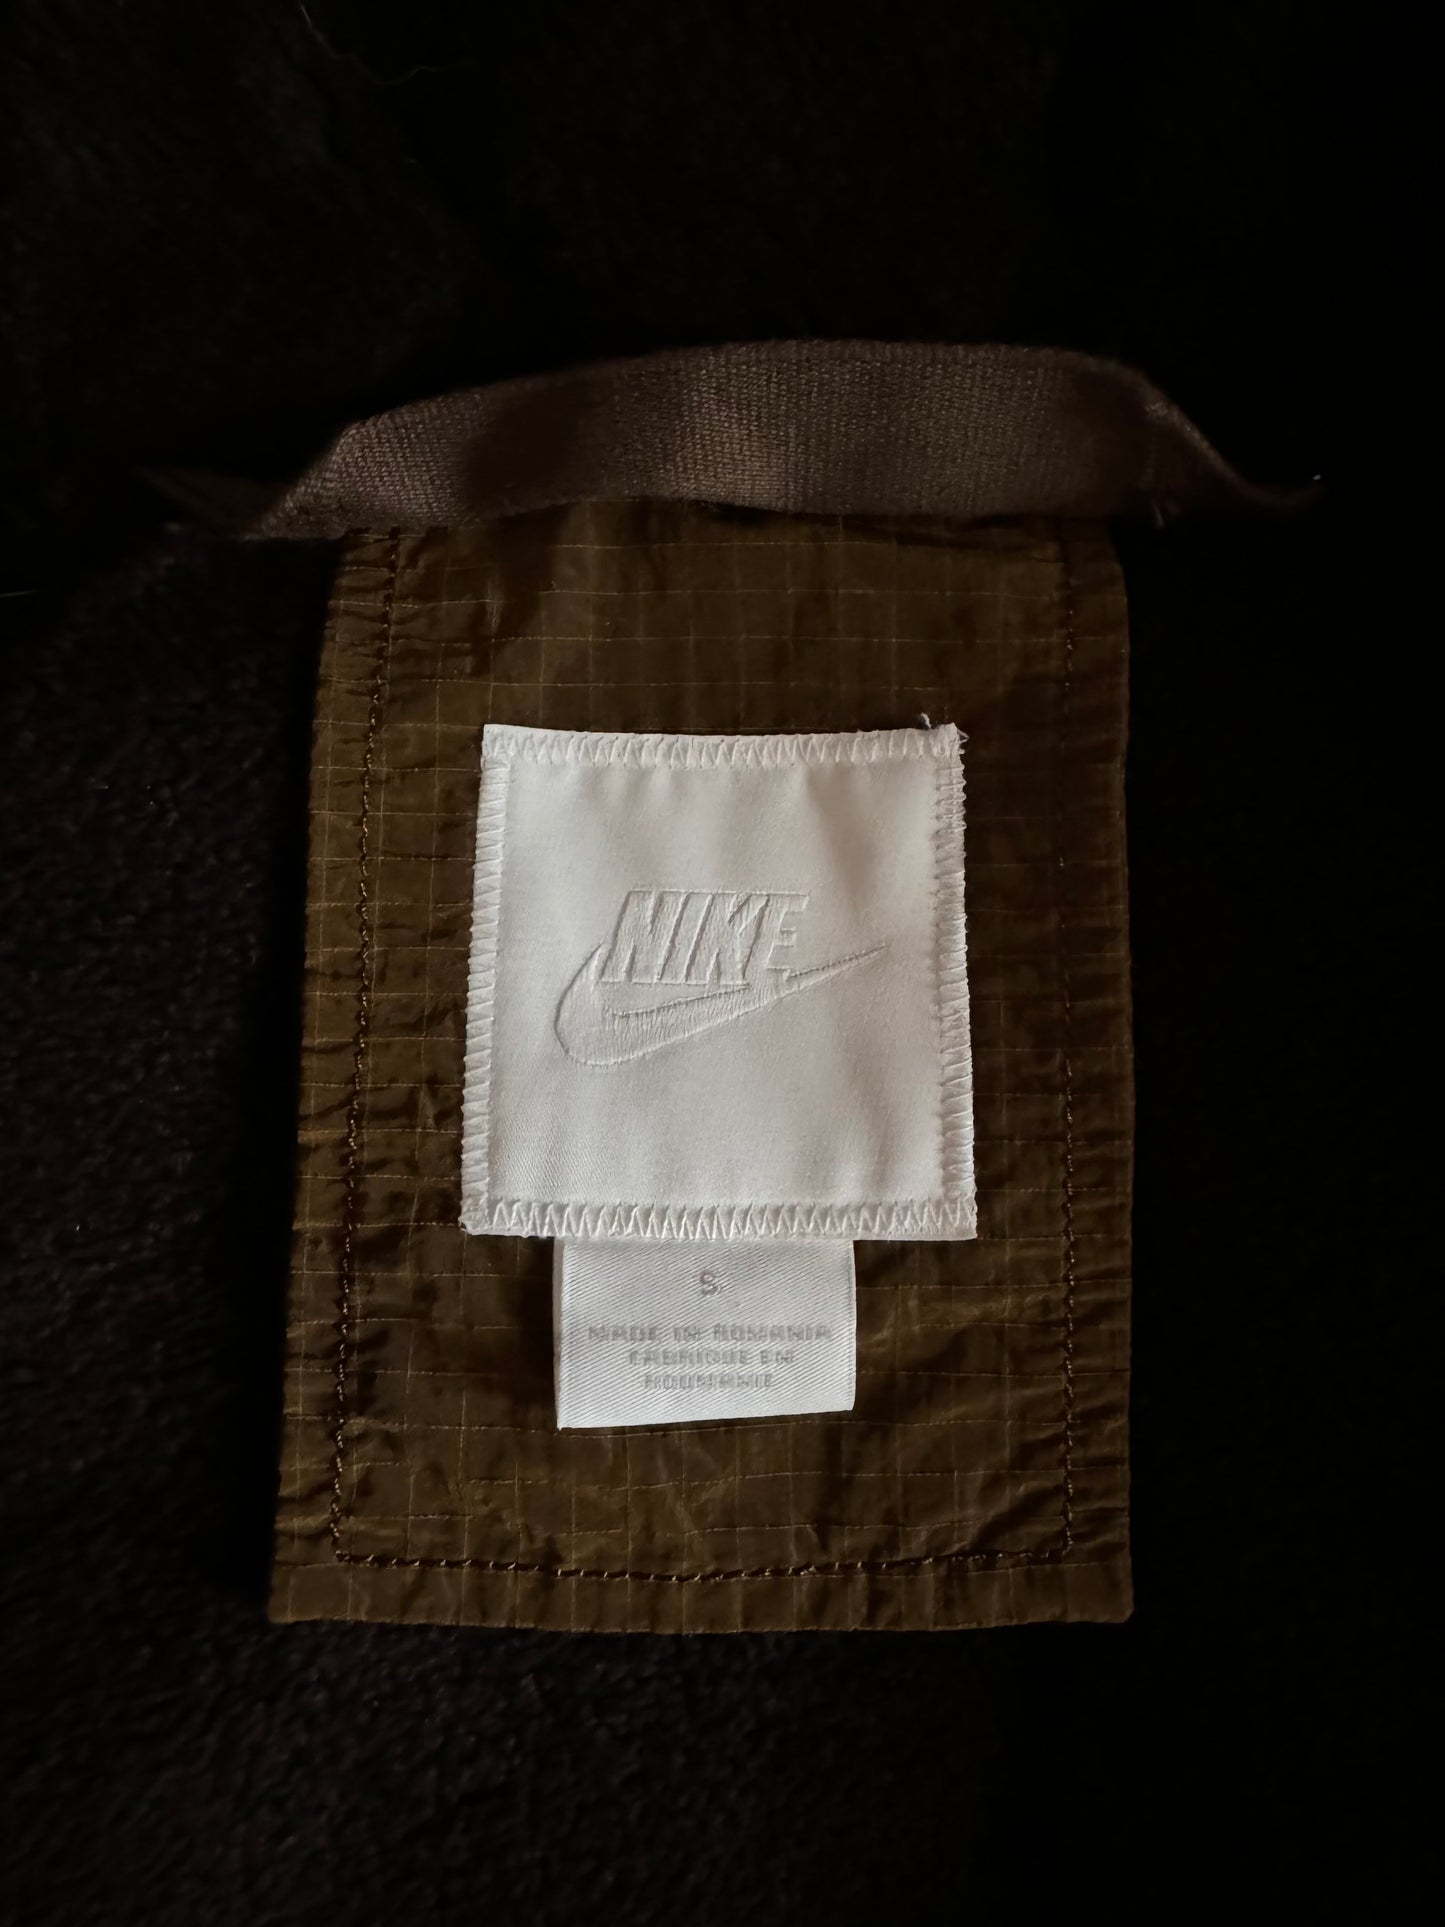 Stone Island x Nike 'Jacquard Grid On Wool Fur' Jacket - Small